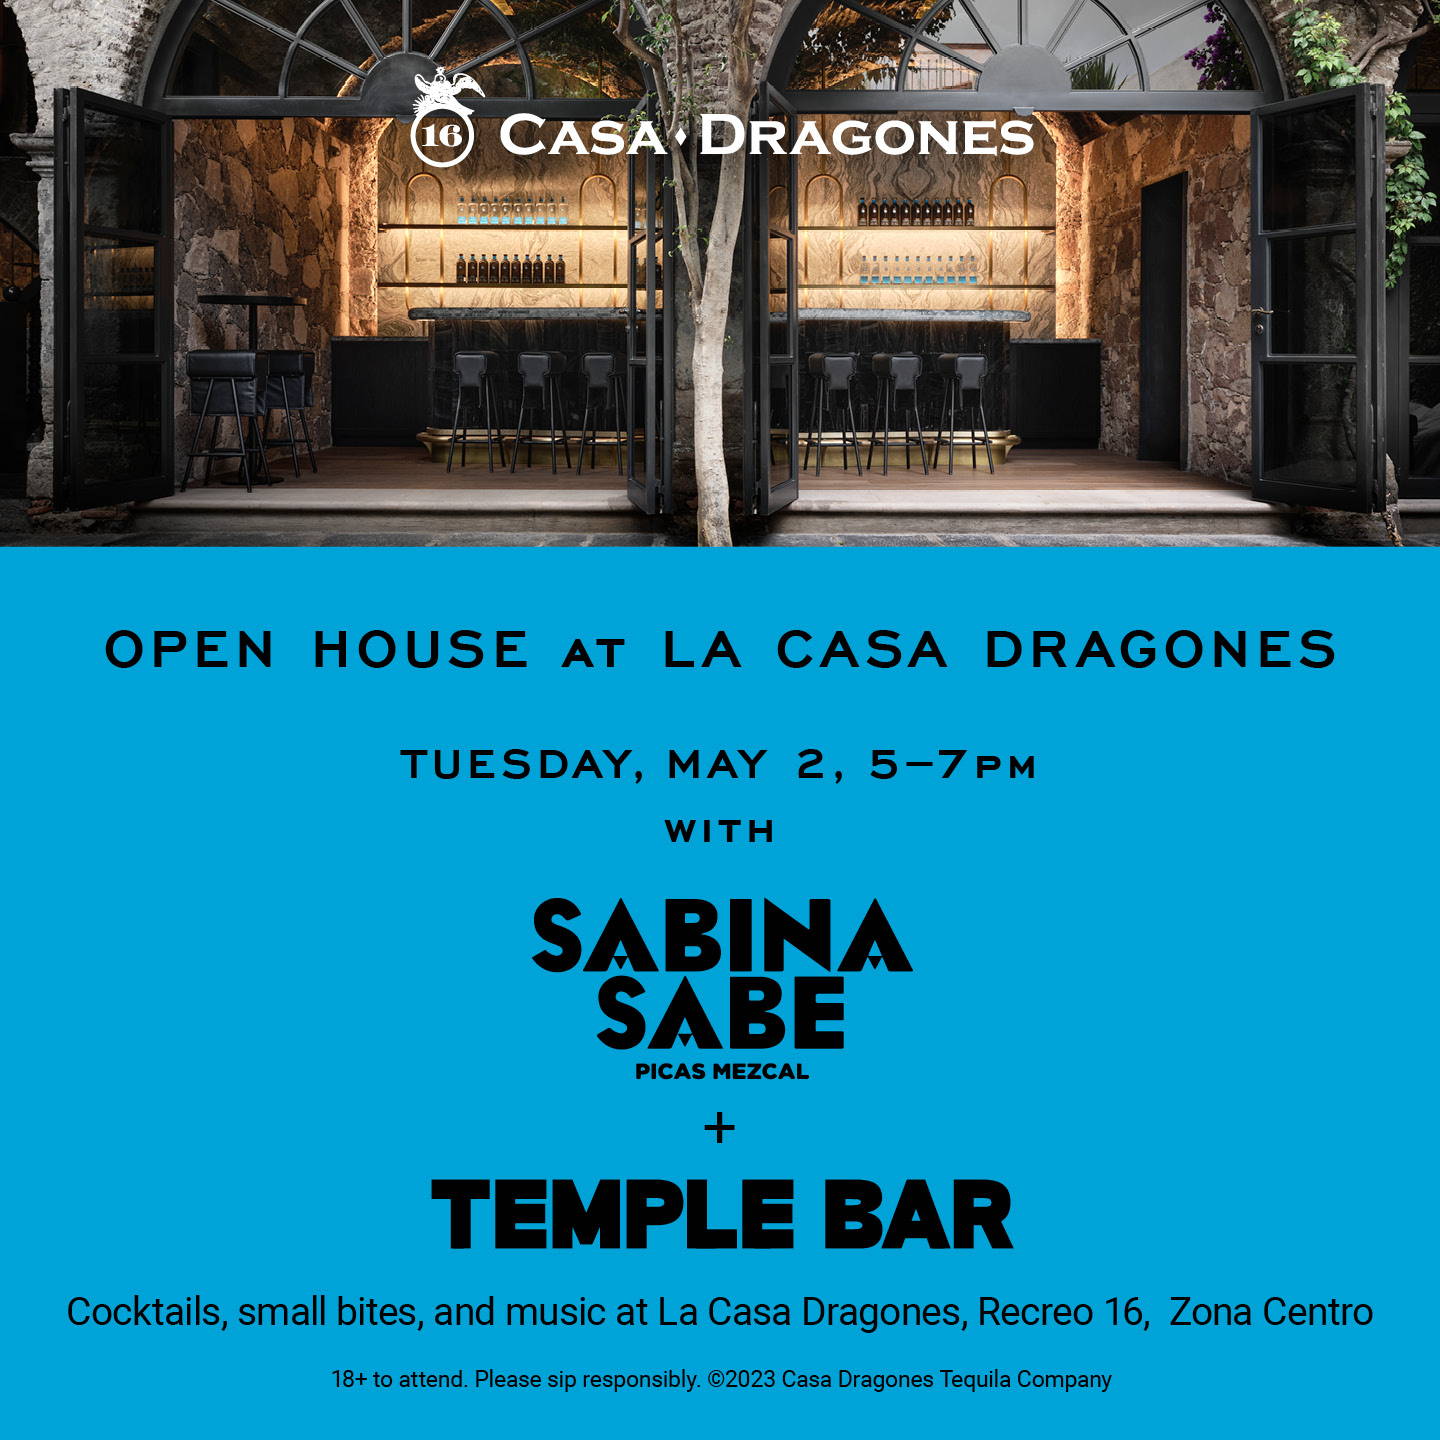 sabina sabe, temple bar, open house at la casa dragones with international mixologists, invitation